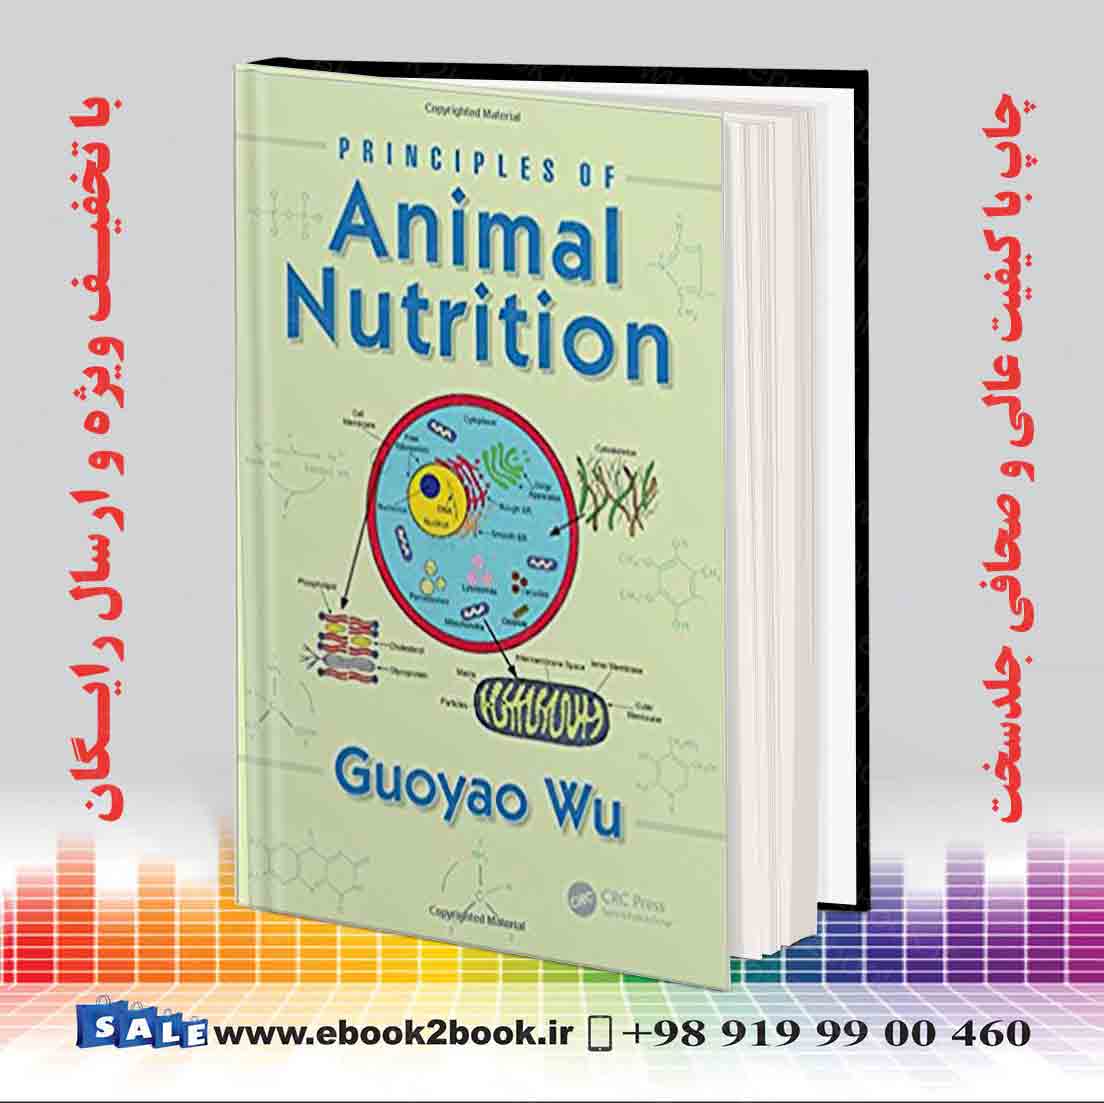 Principles of Animal Nutrition, 1st Edition | فروشگاه کتاب ایبوک تو بوک